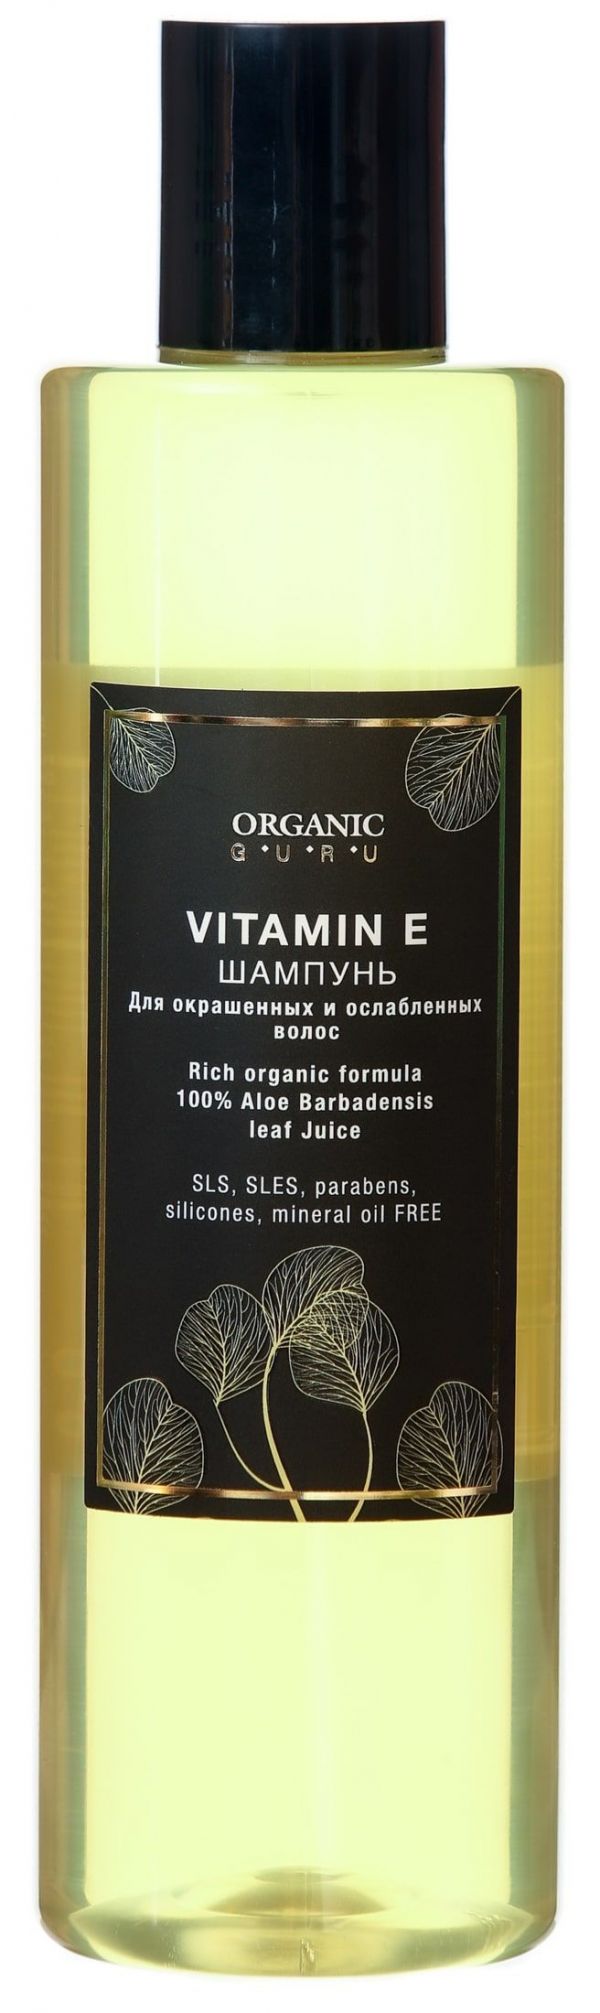 Organic guru шампунь 250мл витамин е